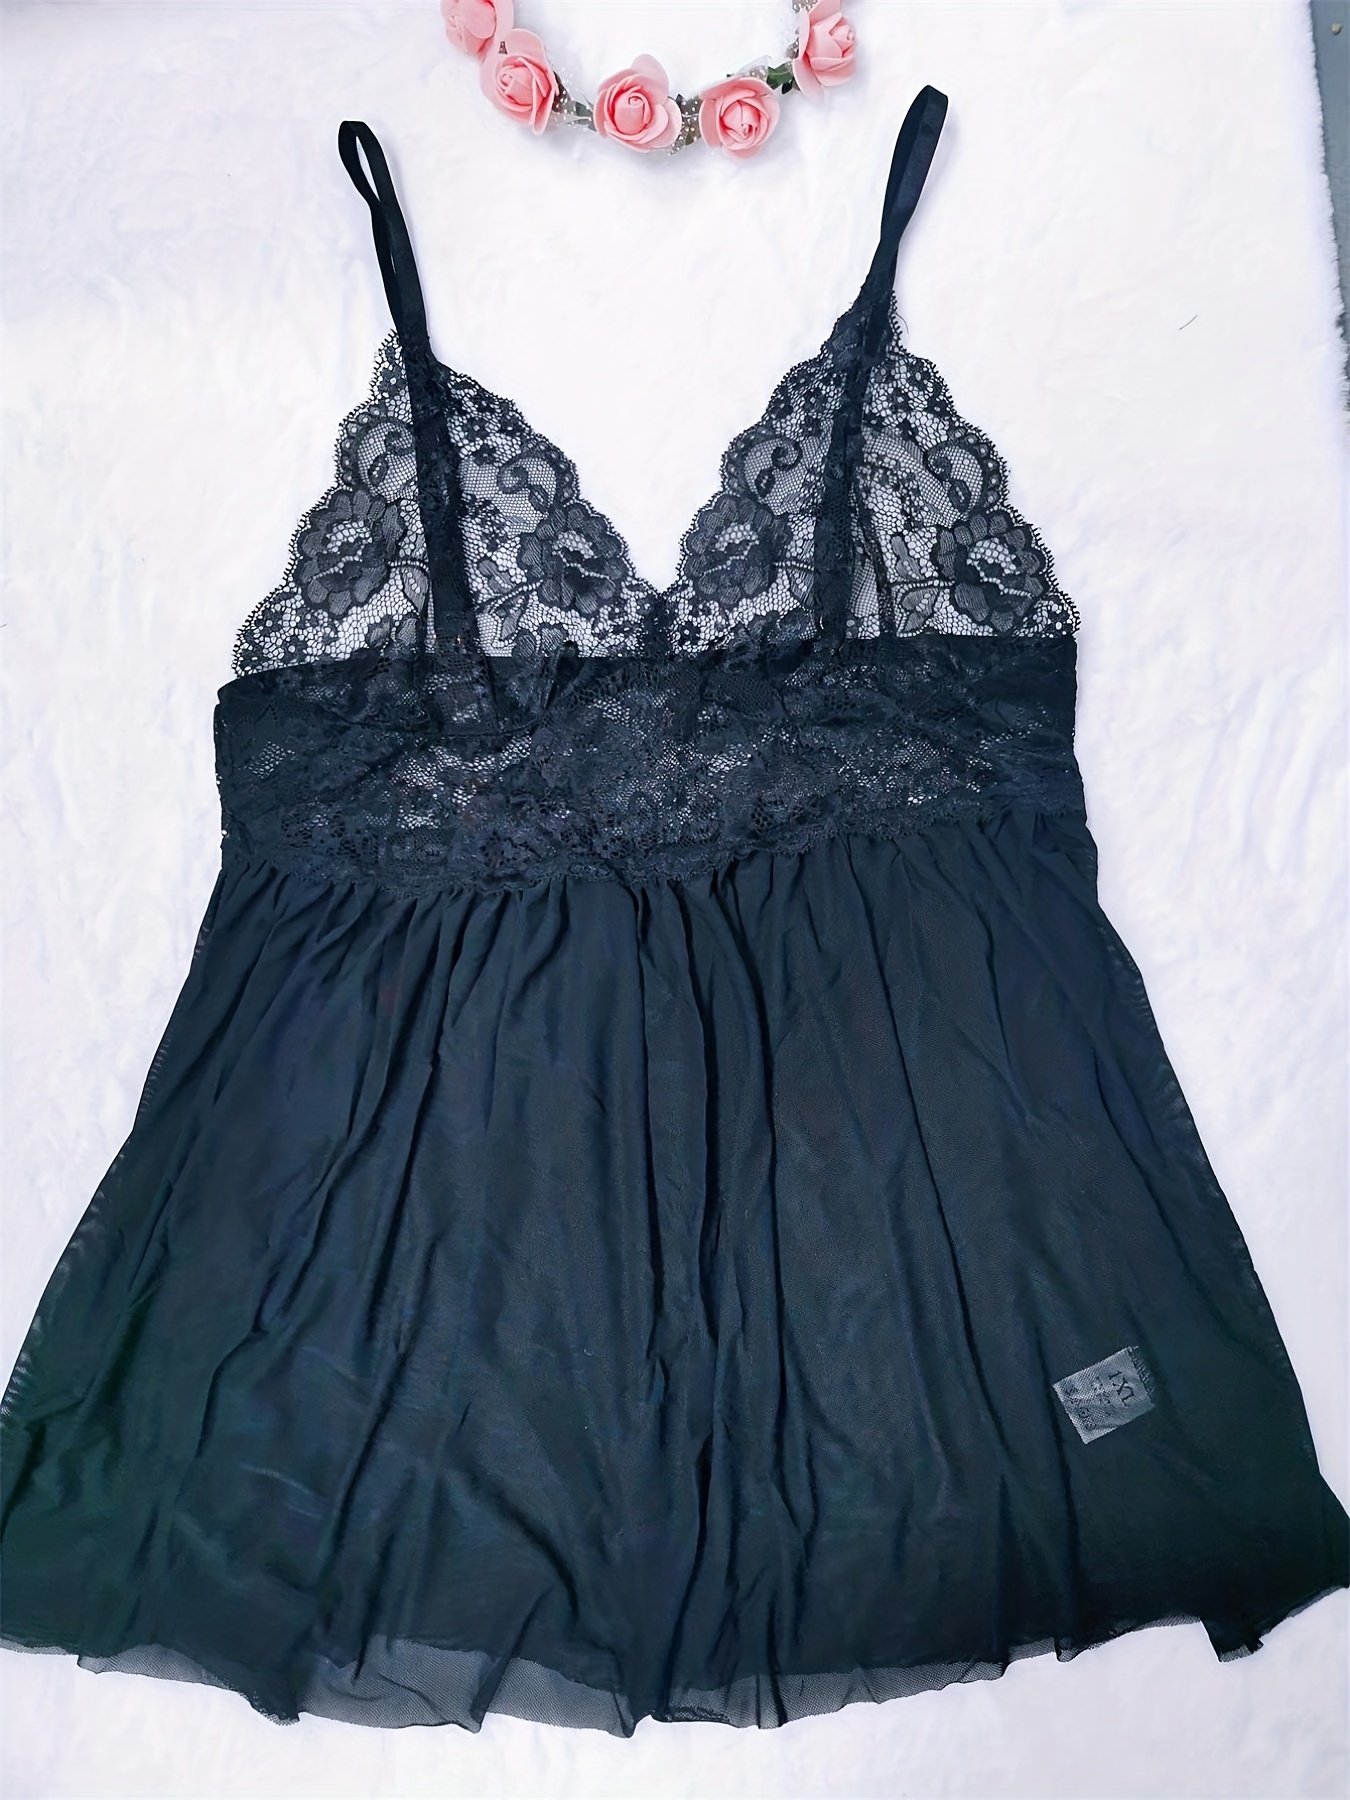 Plus Size Sexy Lingerie Dress, Women's Plus Polka Dot Print Contrast Lace  Scallop Trim Bow Babydoll Dress